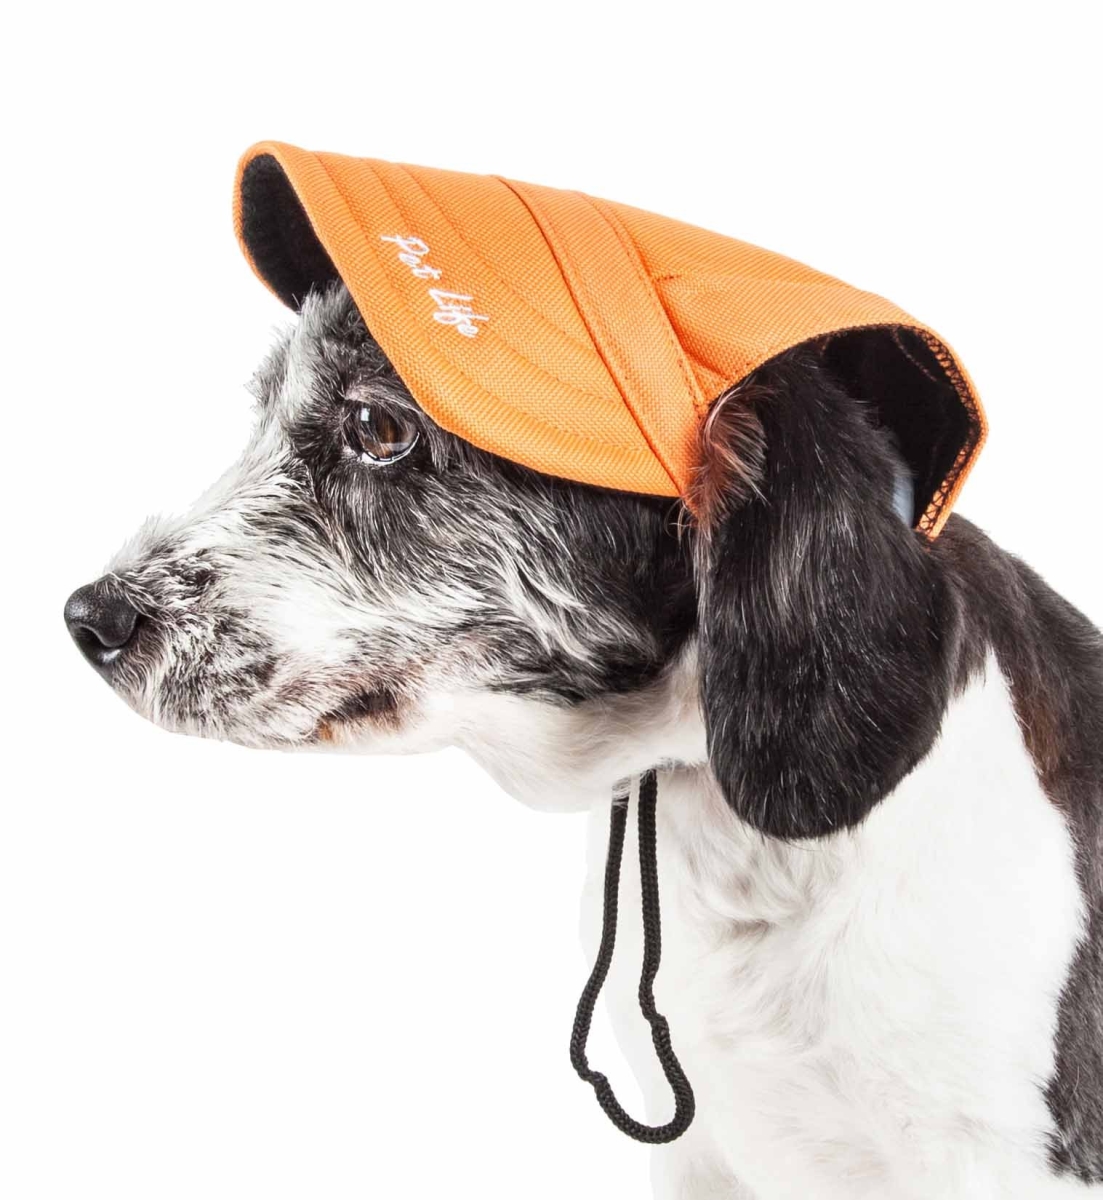 Picture of Pet Life HT6ORLG Cap-Tivating UV Protectant Adjustable Fashion Dog Hat - Orange, Large